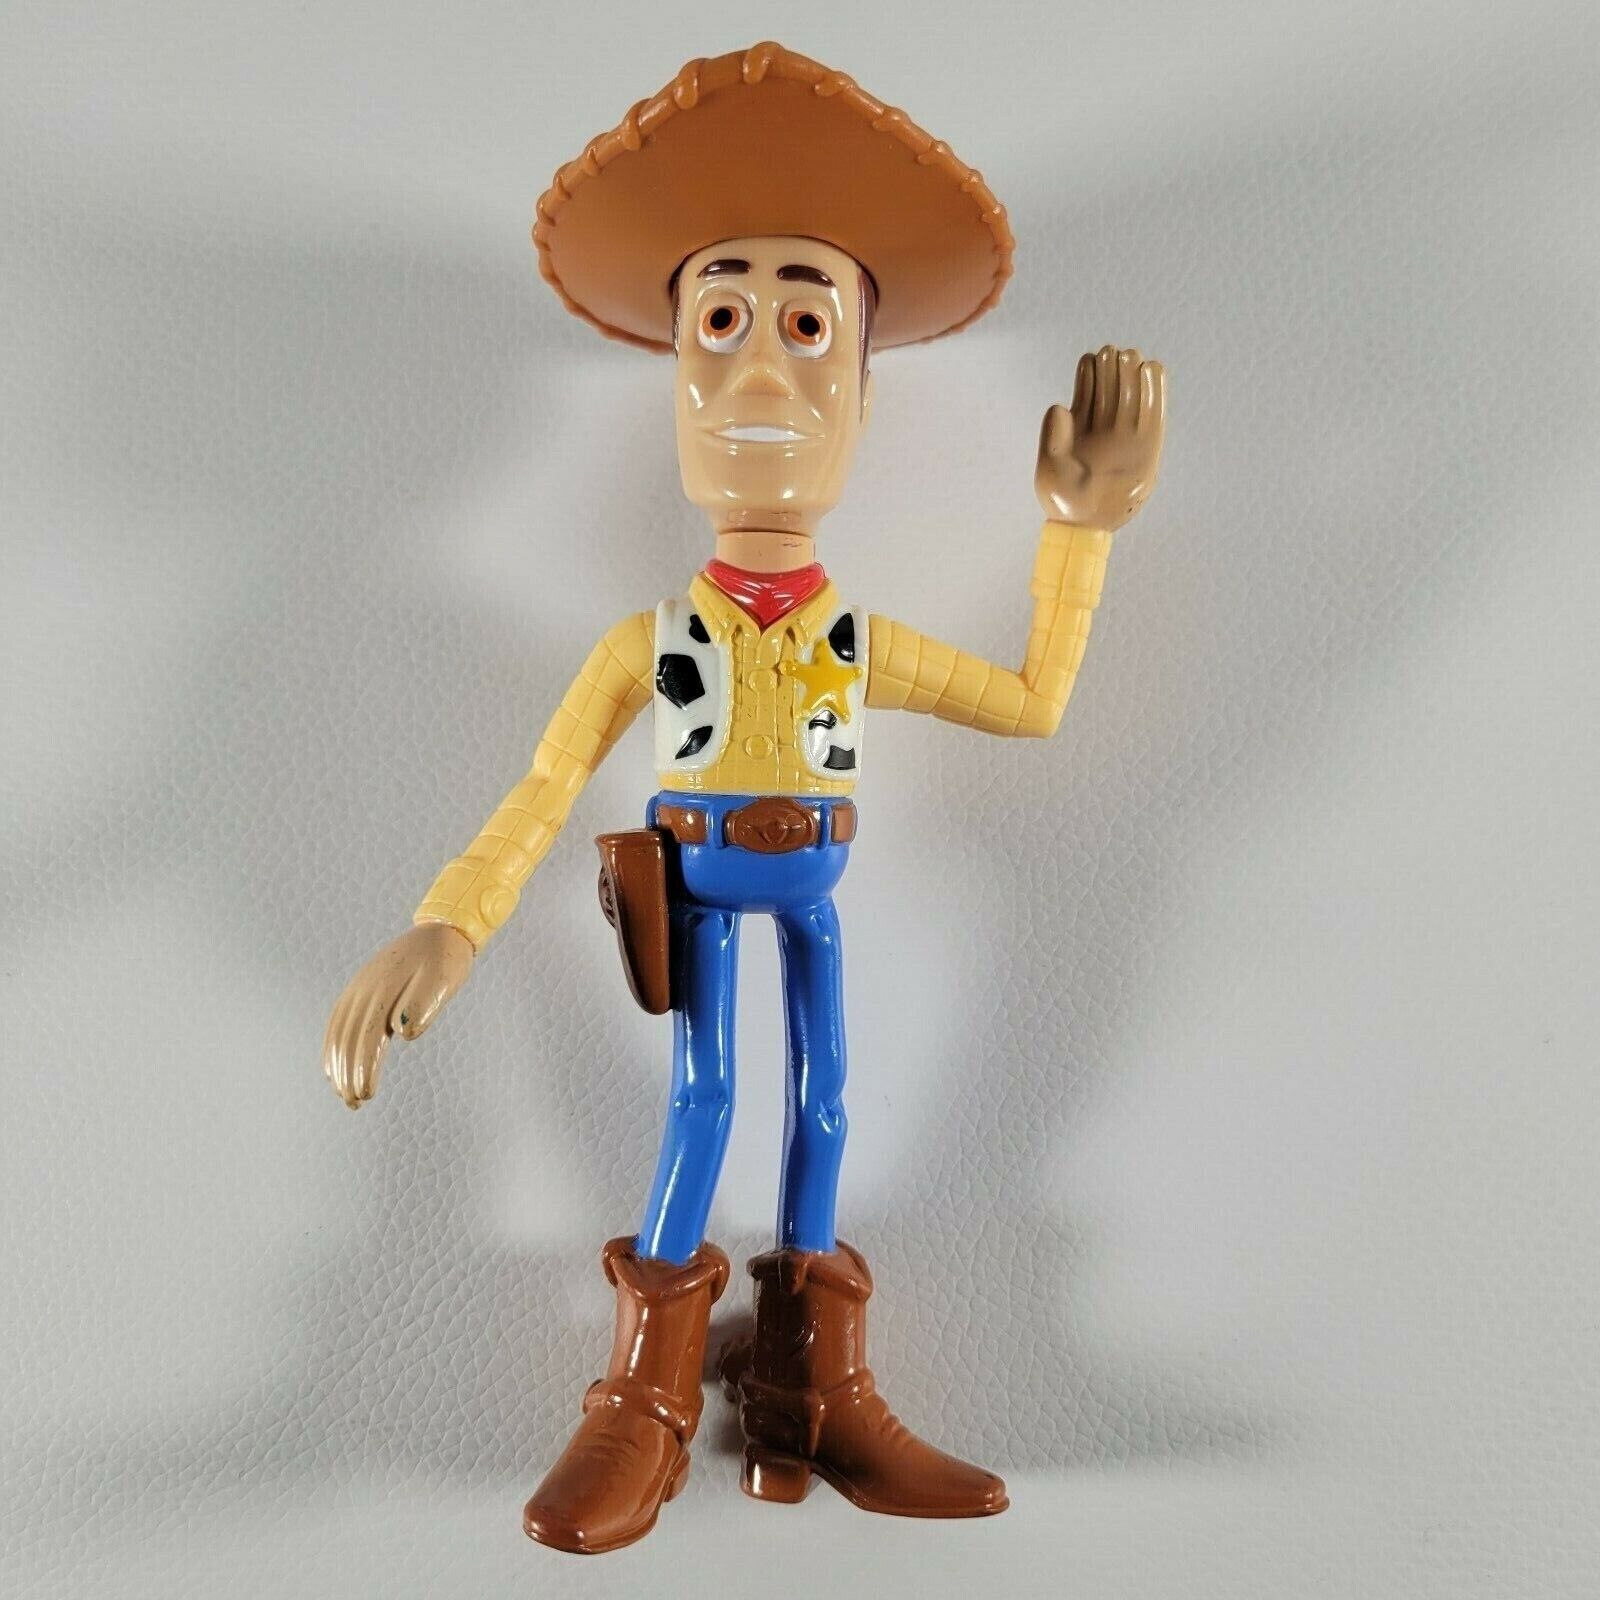 Toy Story Sheriff Woody Action Figure 6" Tall Disney Pixar McDonalds - $8.97